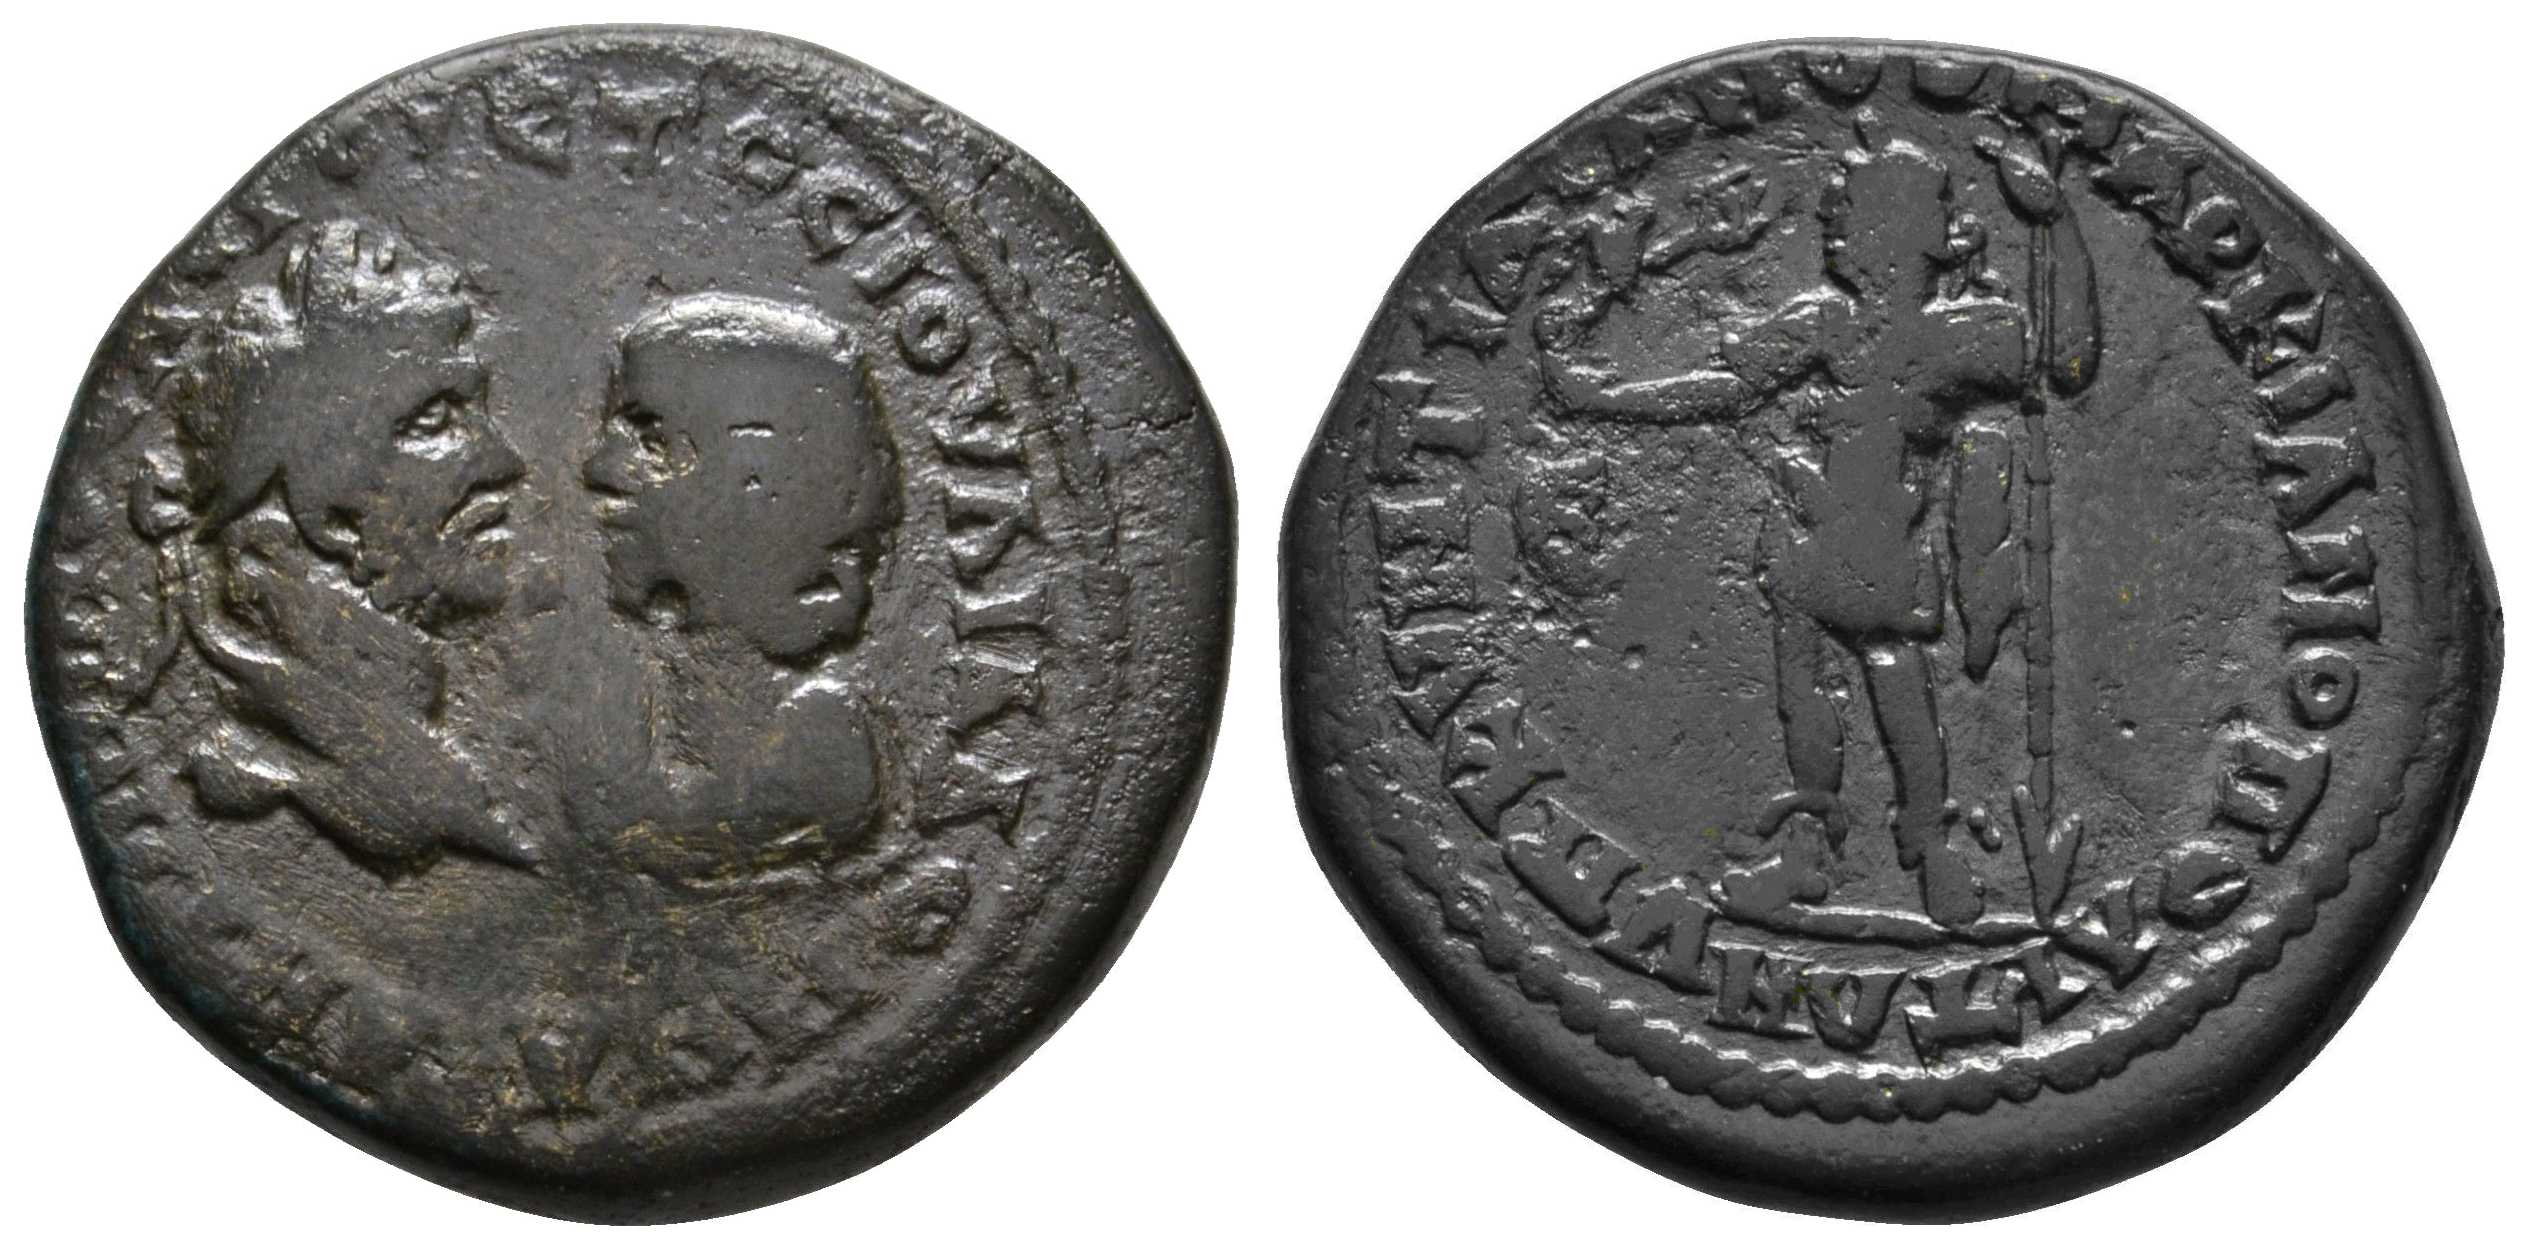 6025 Marcianopolis Moesia Inferior Caracalla & Iulia DomnaAE